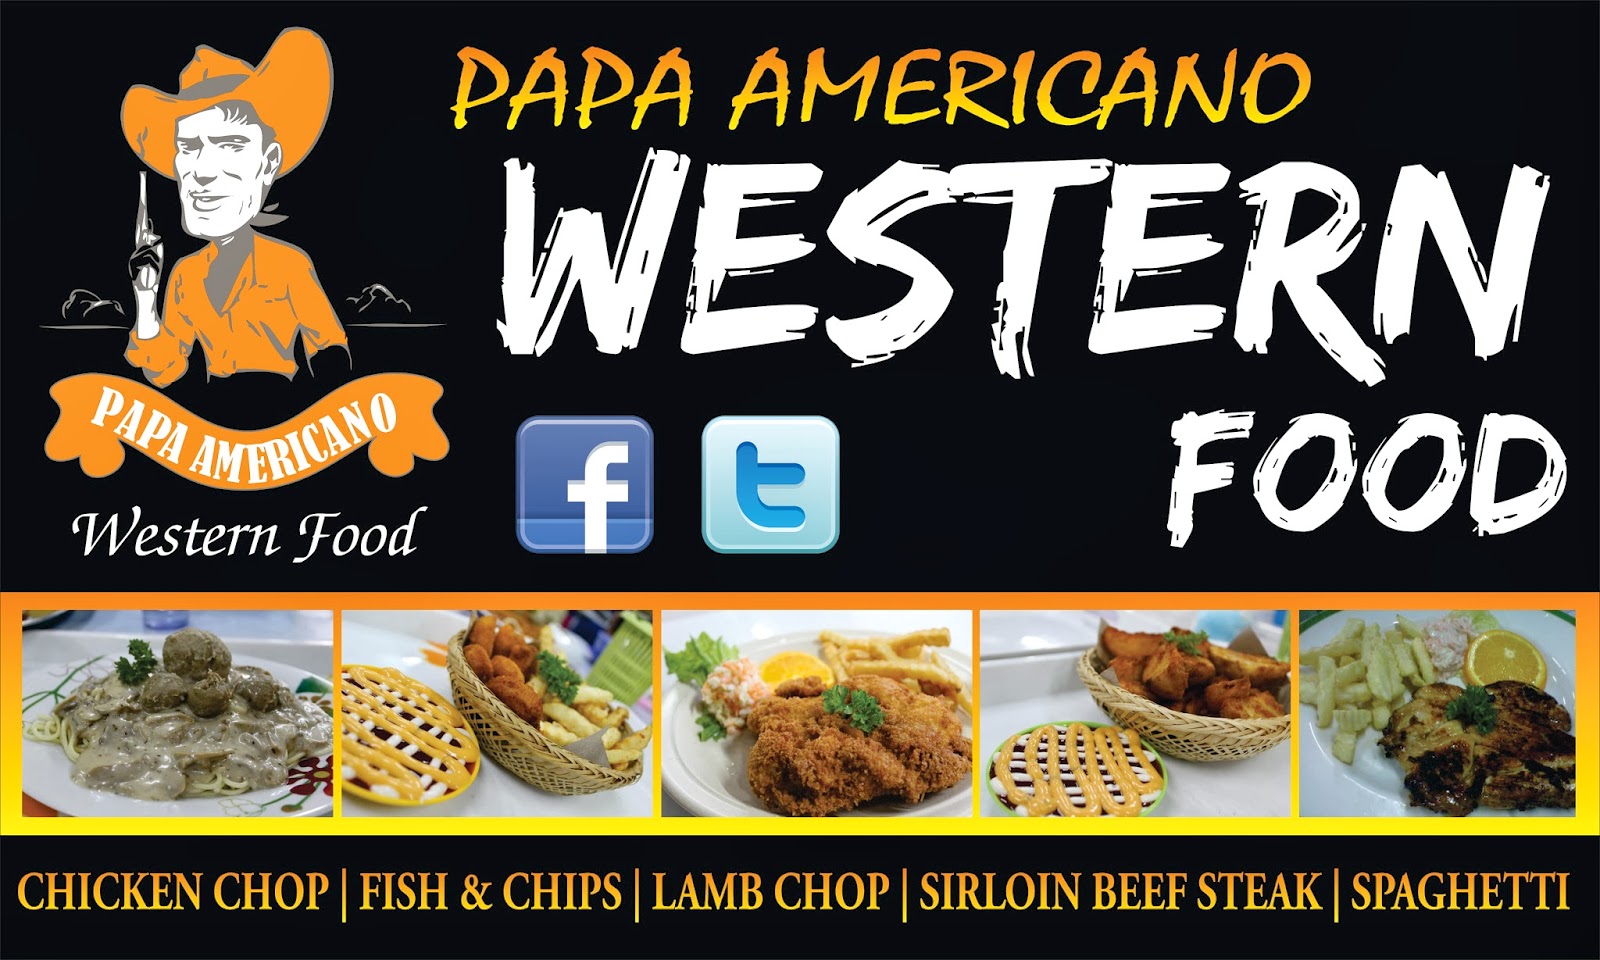 Papa Americano Western Food: Papa Americano Western Food